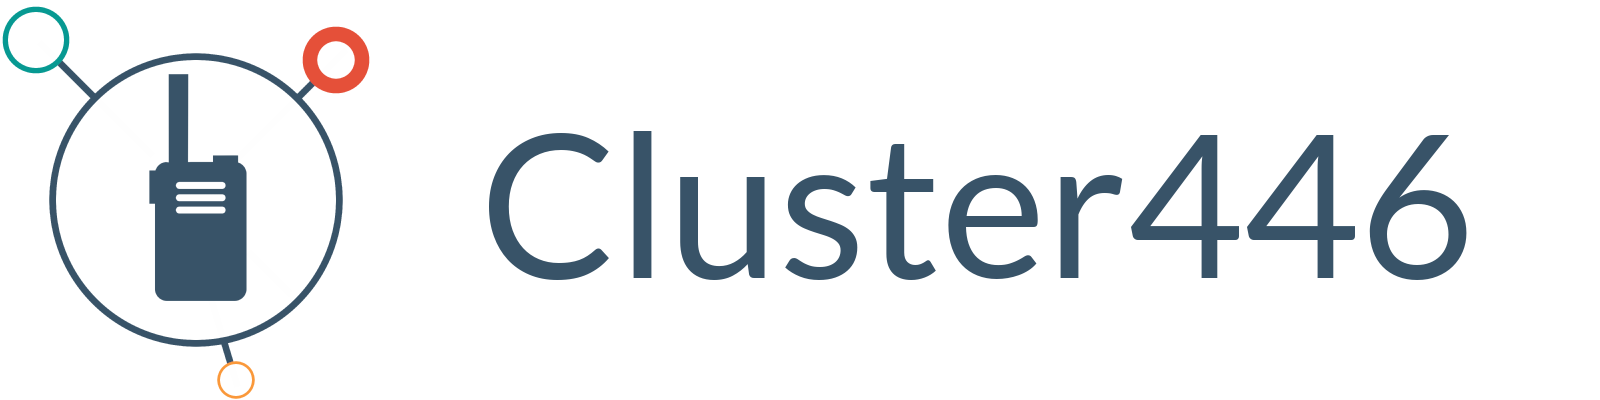 Cluster446